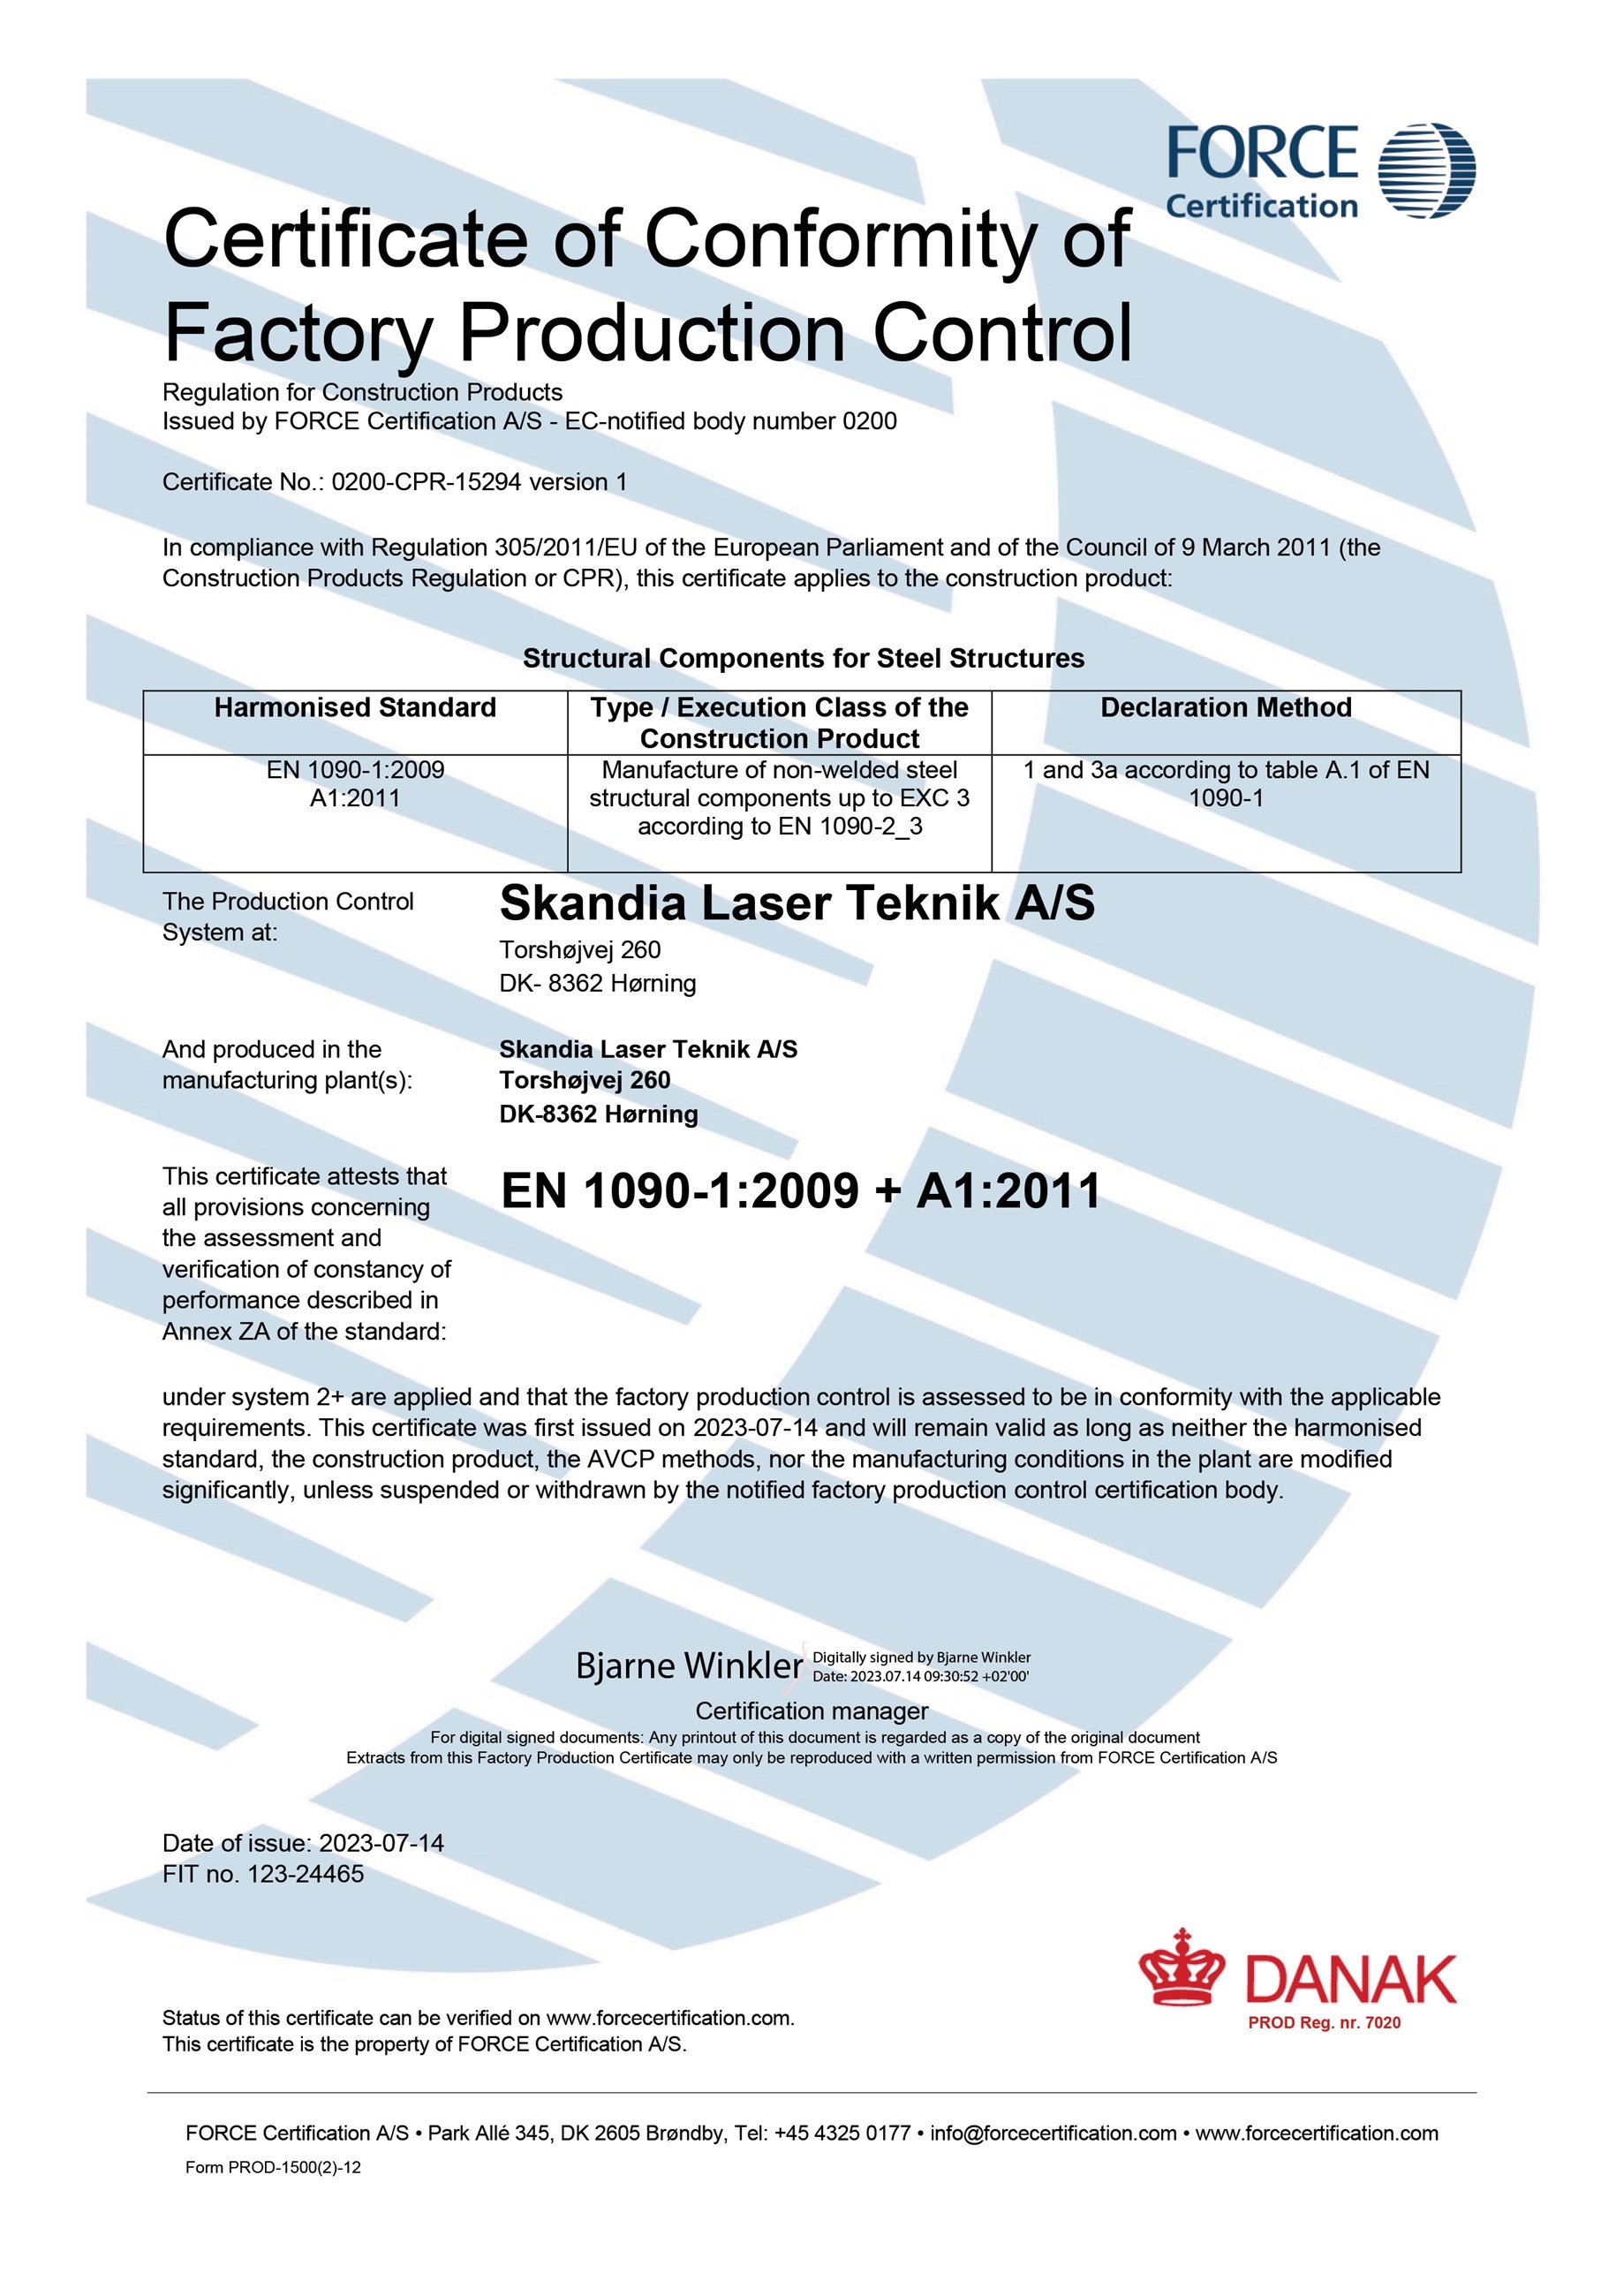 123-24465_en-1090-1-certificate_0200-cpr-15294_skandia-laser-teknik_2023.07